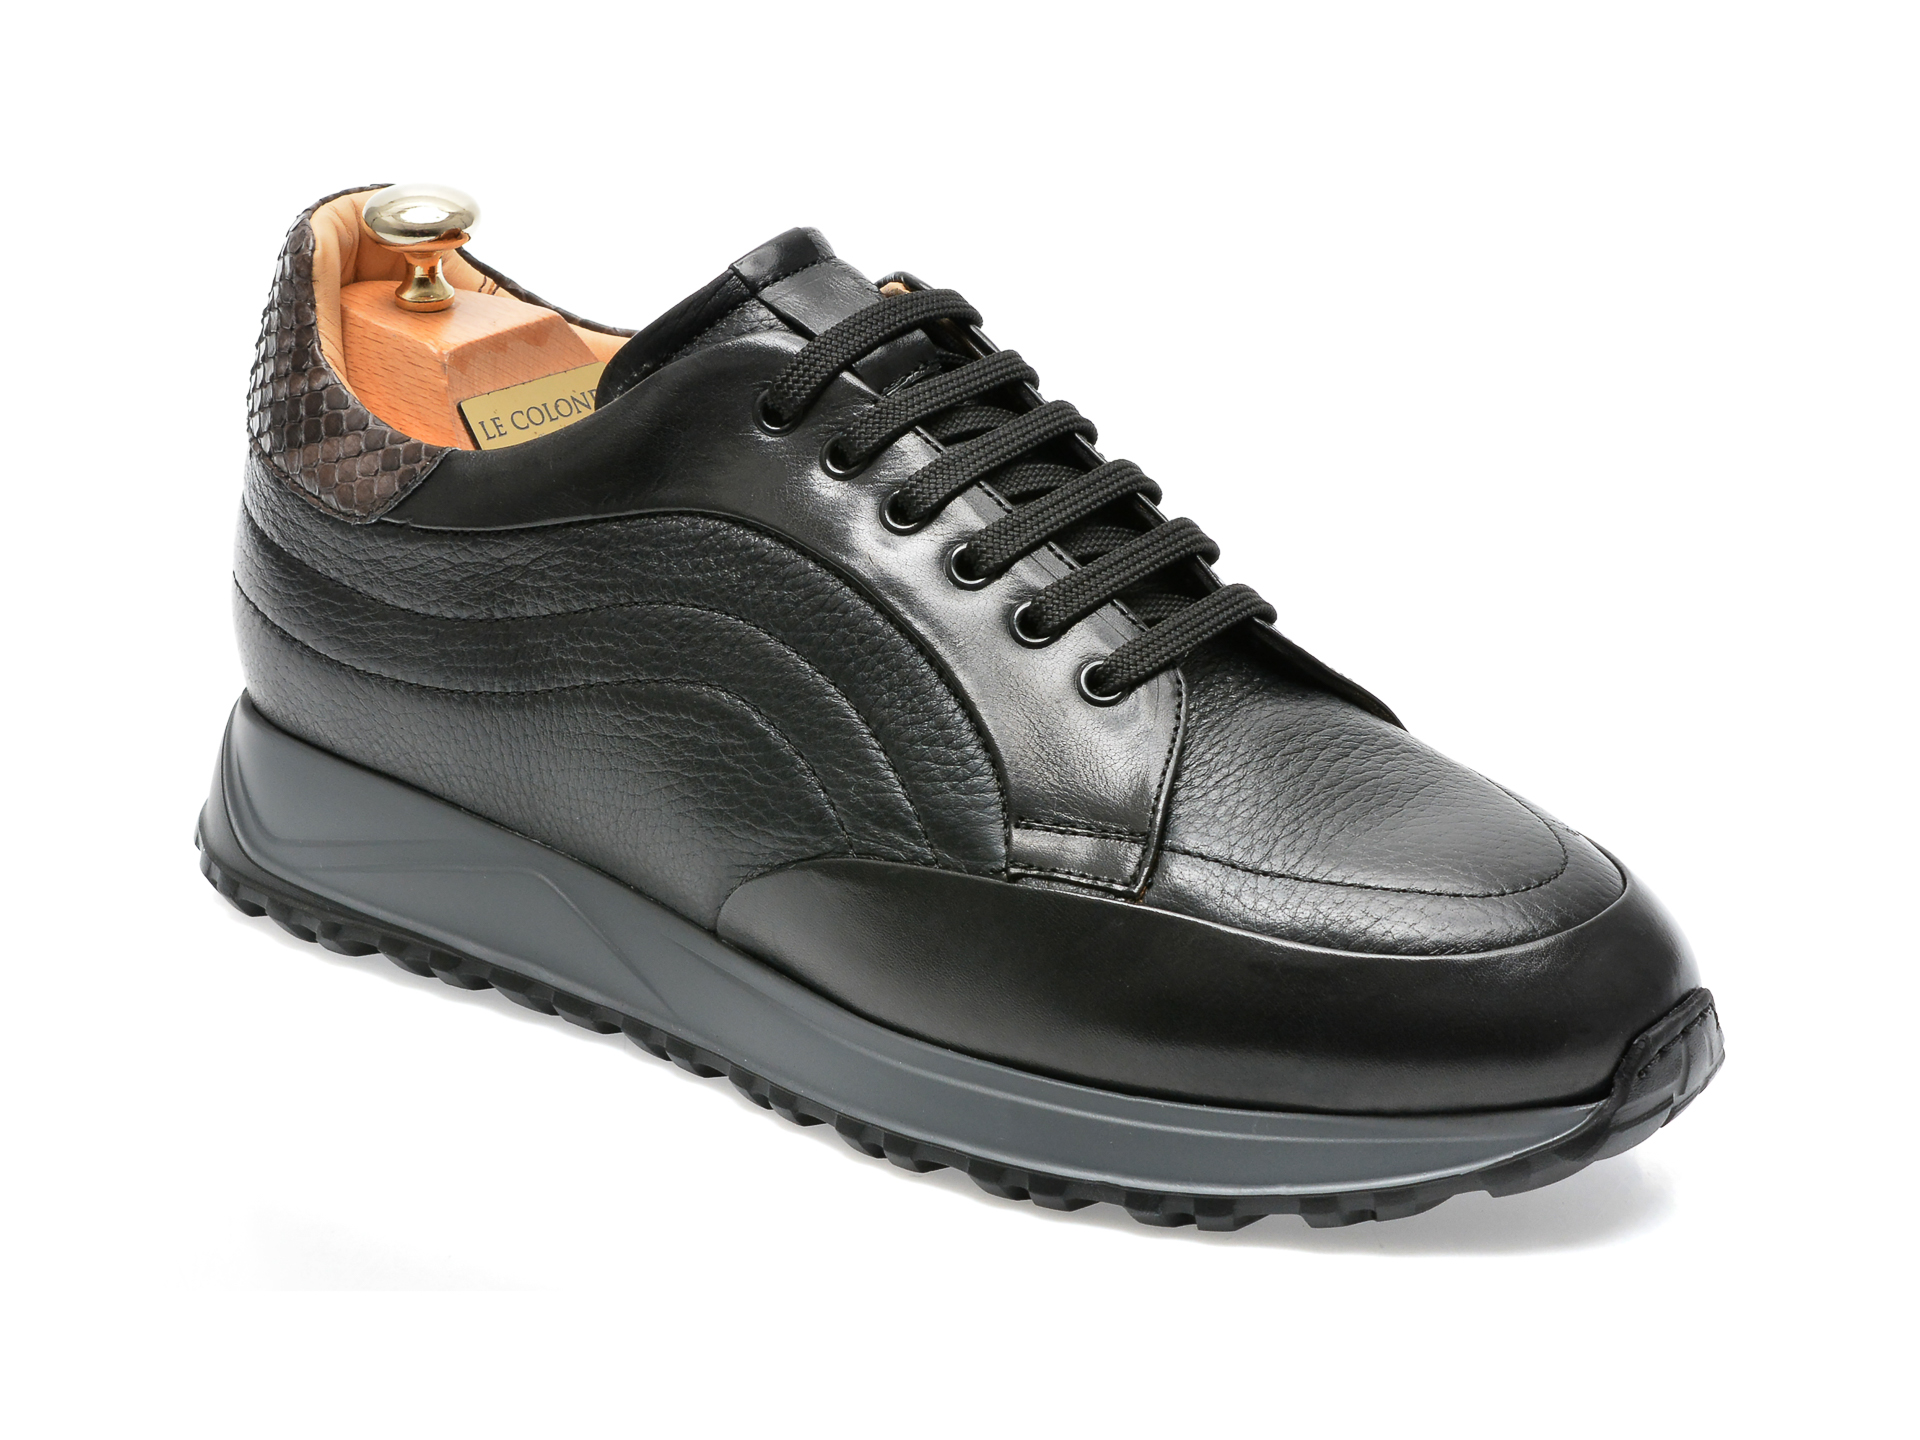 Pantofi LE COLONEL negri, 64330, din piele naturala /barbati/pantofi